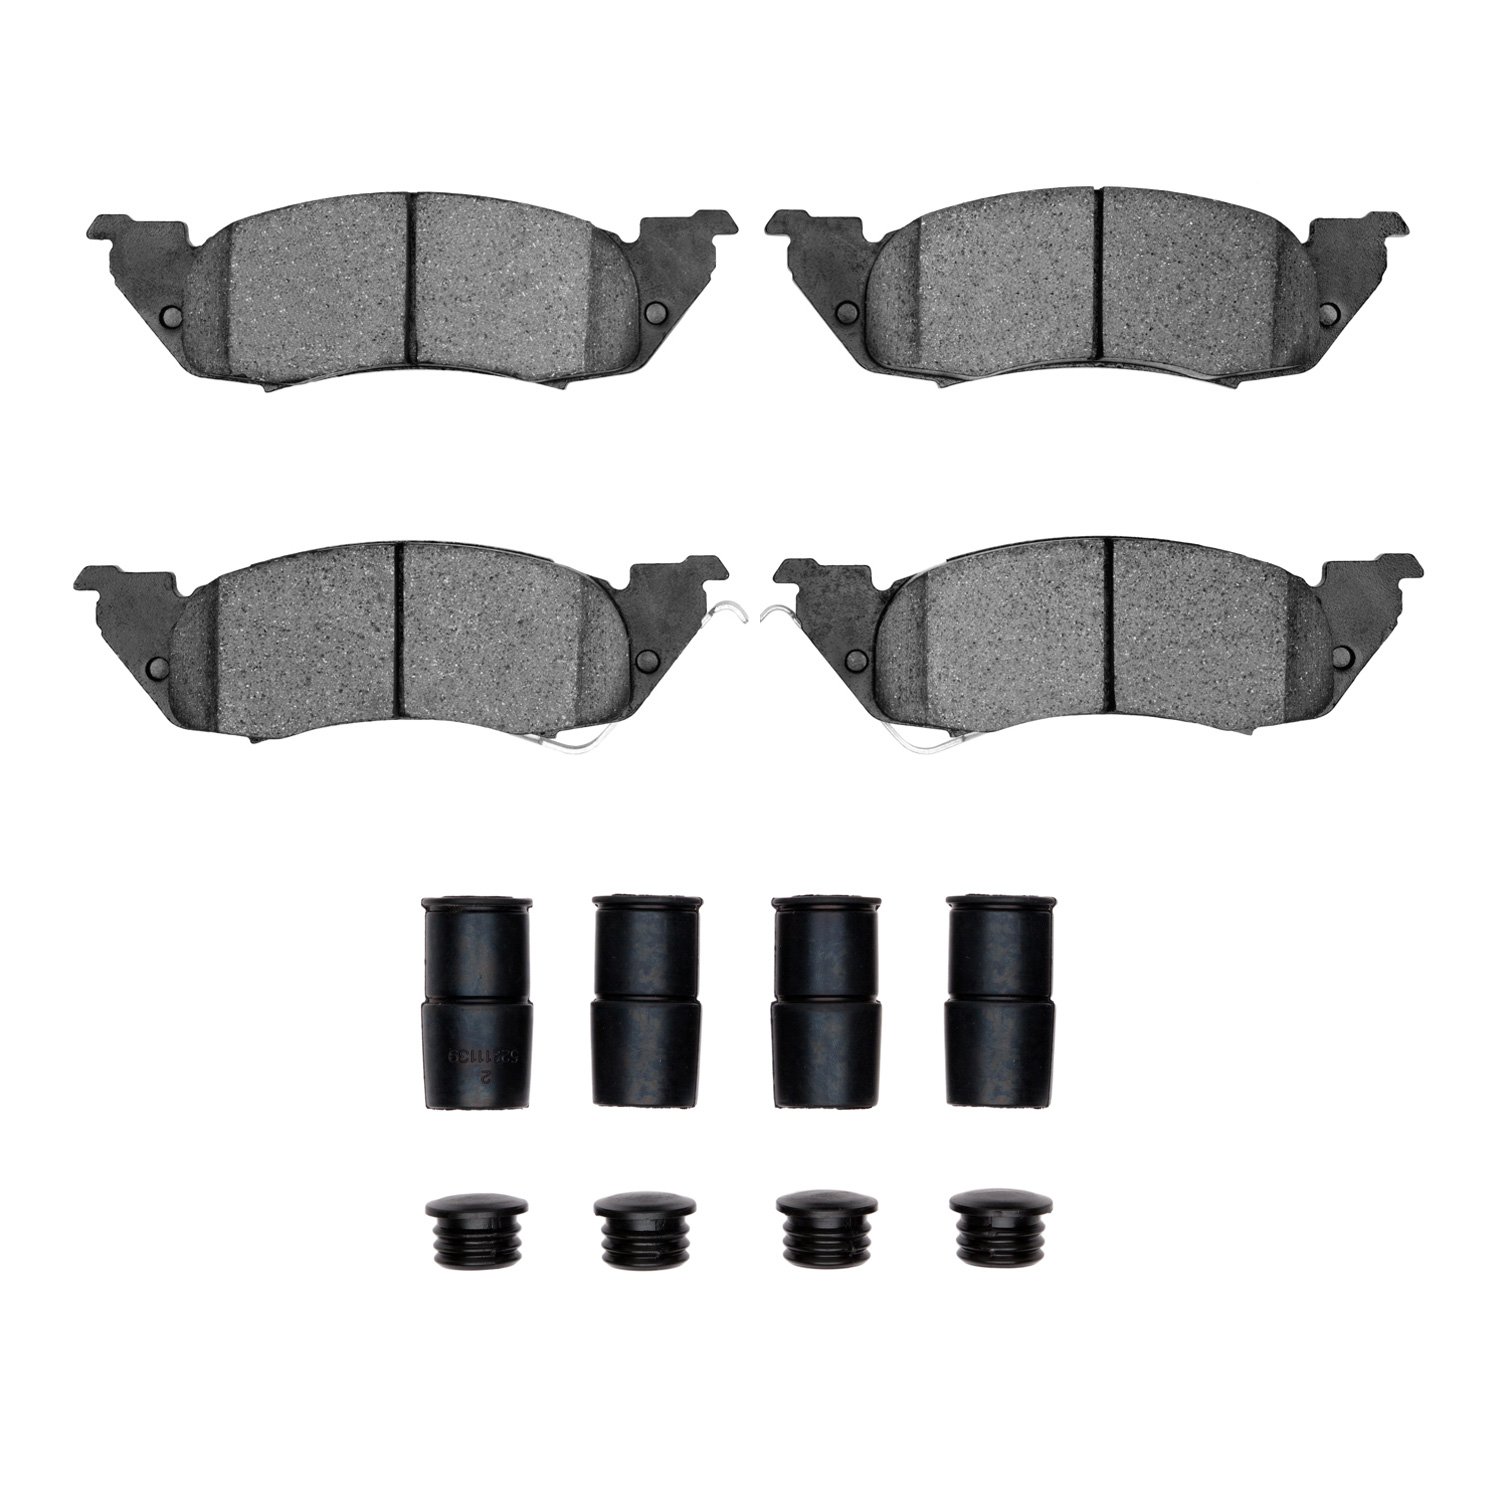 1214-0529-01 Heavy-Duty Brake Pads & Hardware Kit, 1991-1998 Mopar, Position: Front